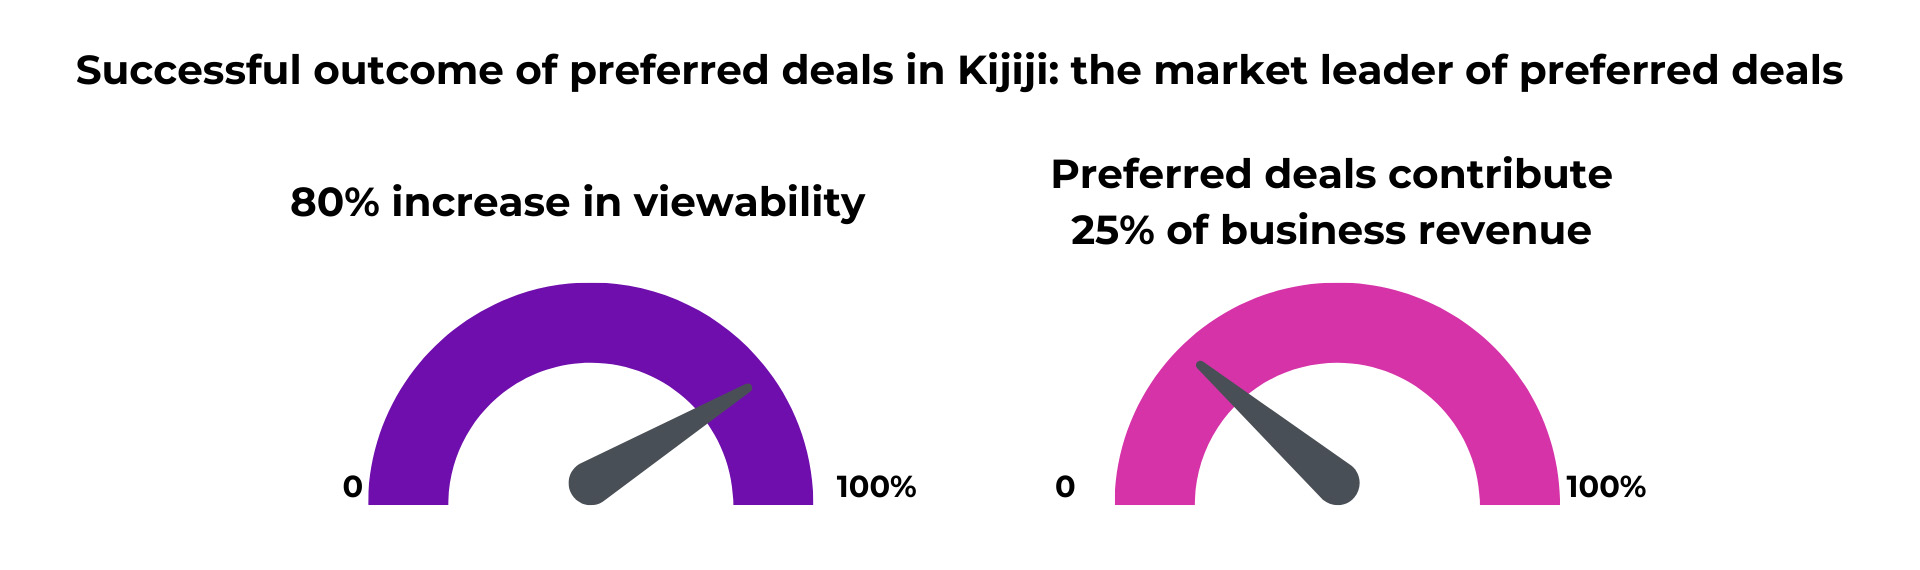 preferred deals-kijiji